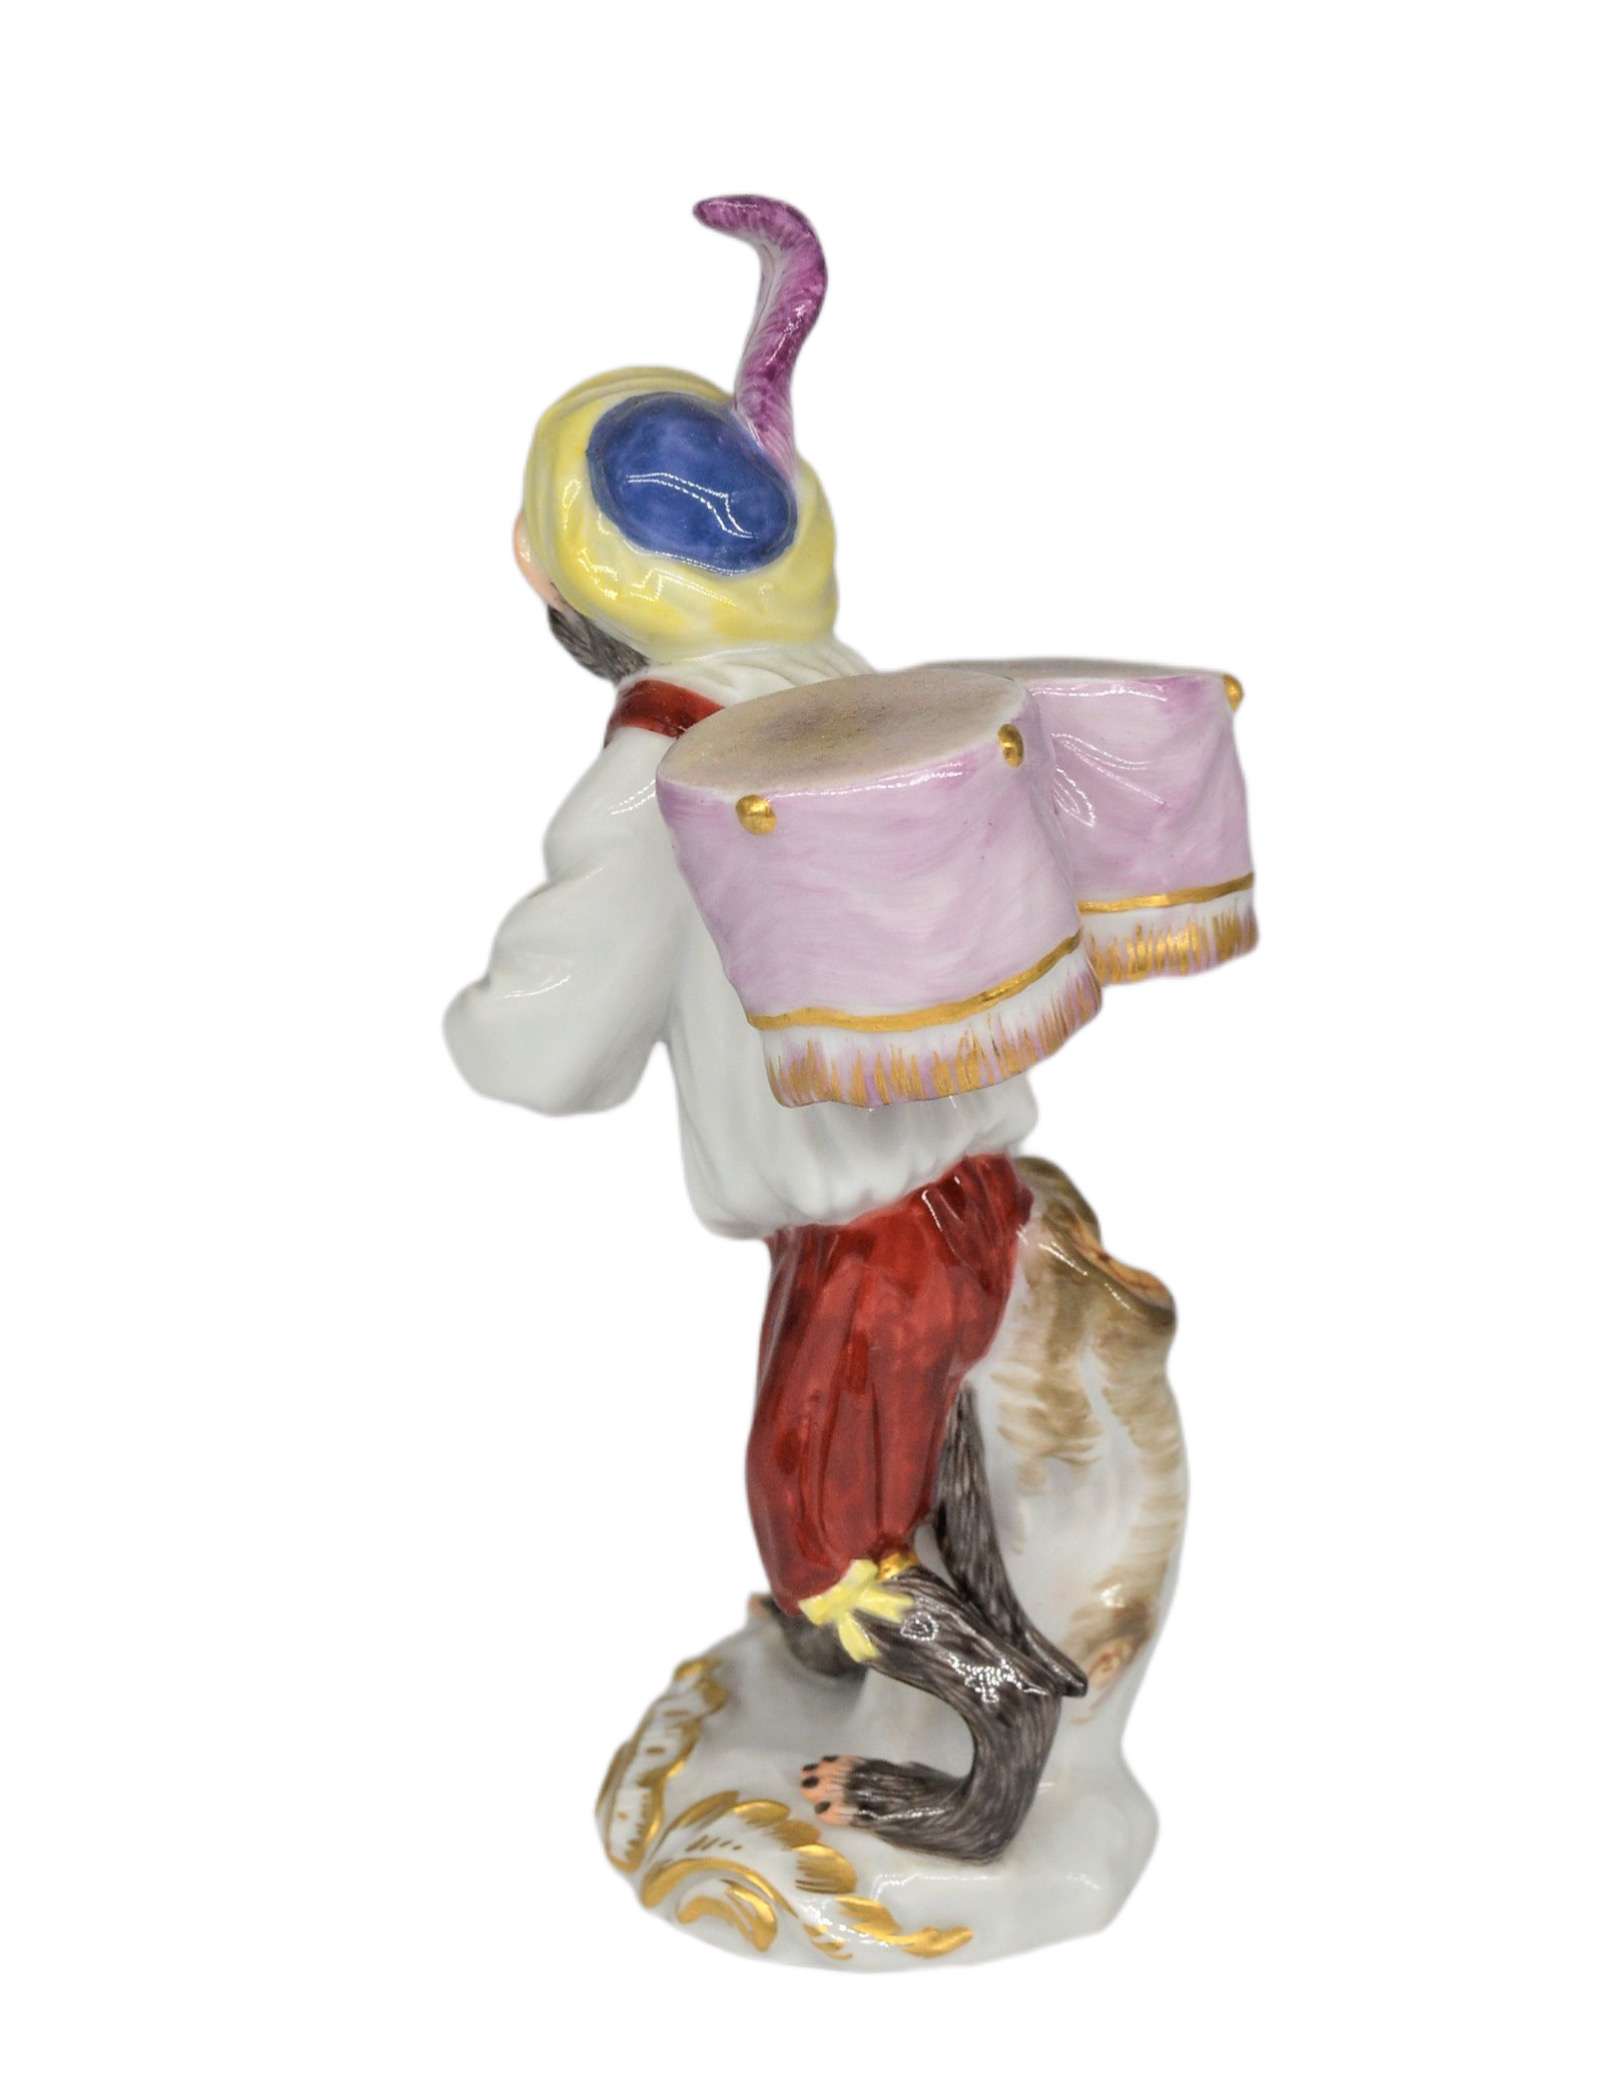 'Drummer' figurine from 'Monkey Orchestra' 2